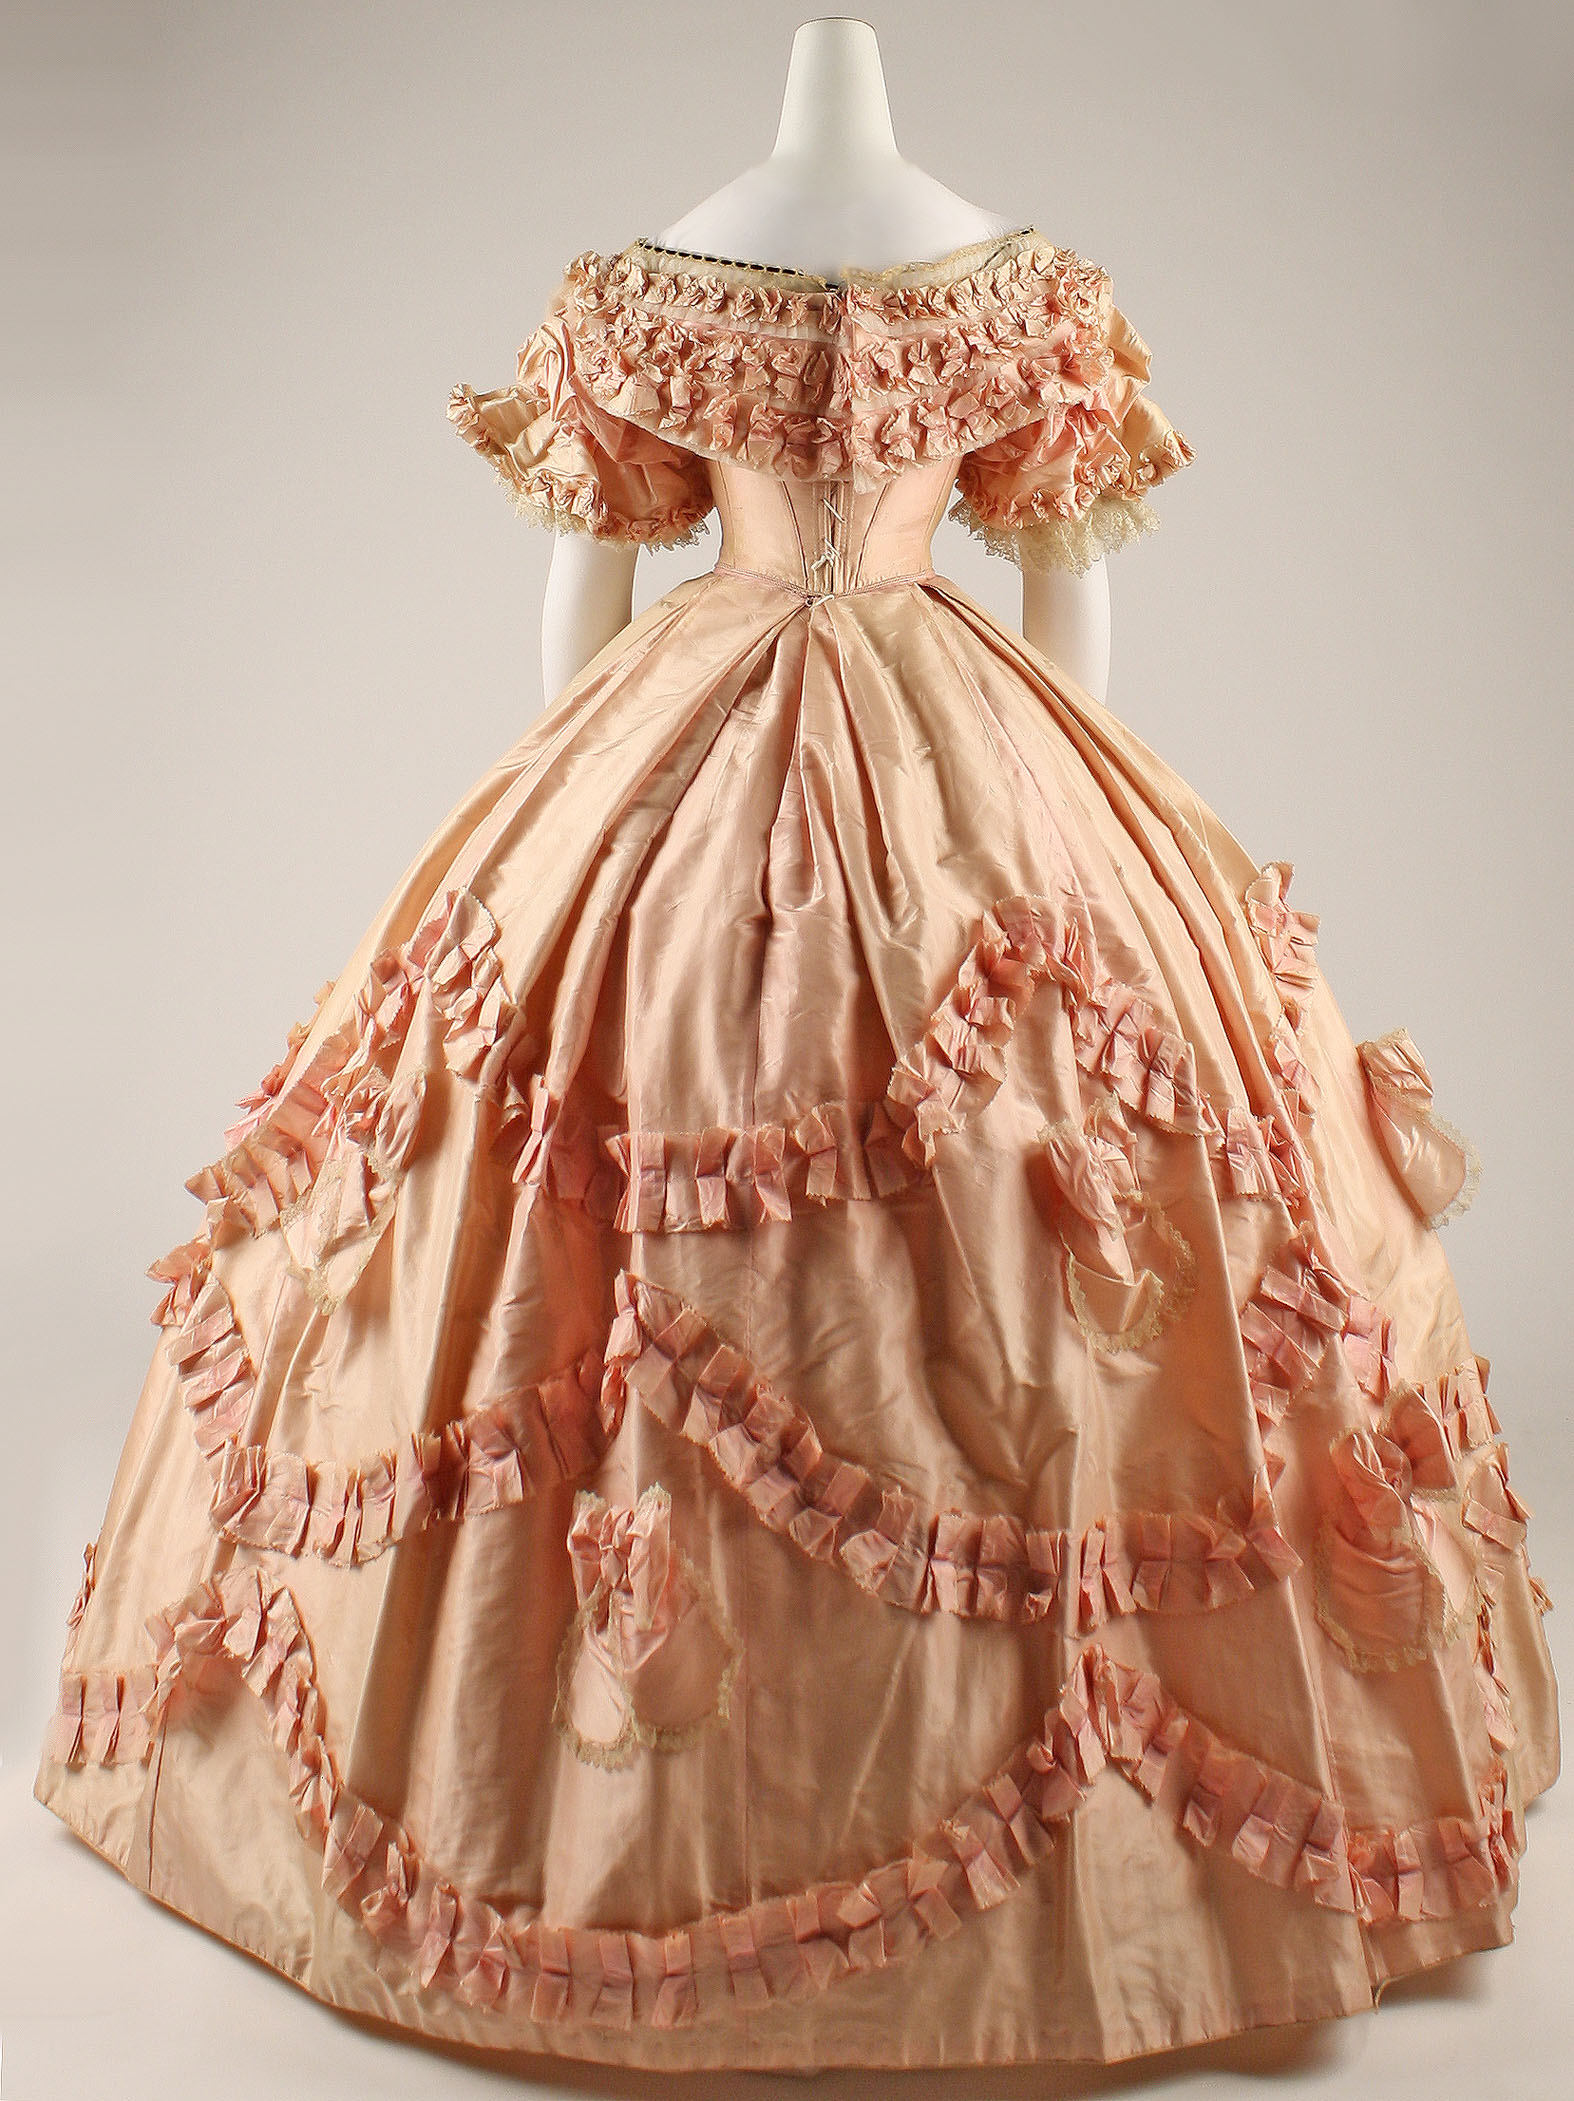 Dress | French | The Metropolitan Museum of Art